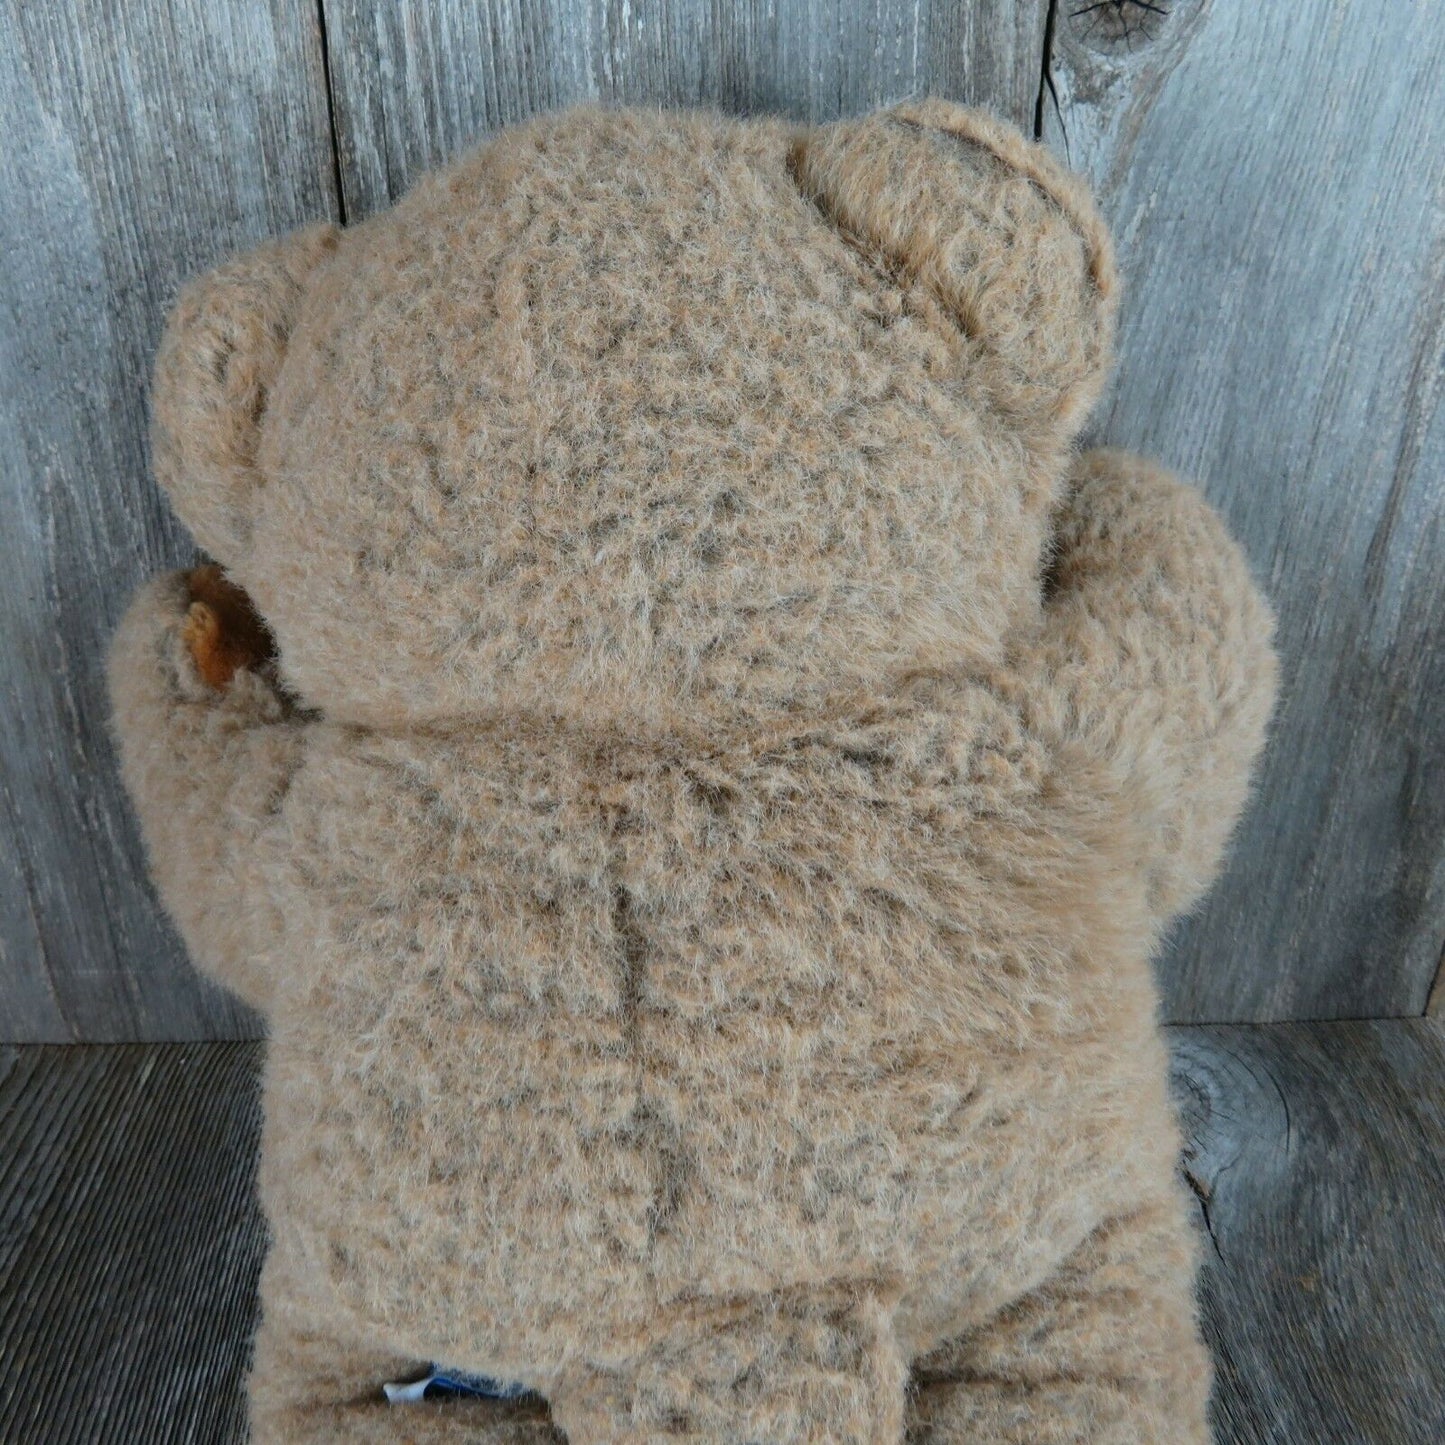 Vintage Teddy Bear Plush J C Penny Stuffed Animal Toy Doll Soft 1995 - At Grandma's Table